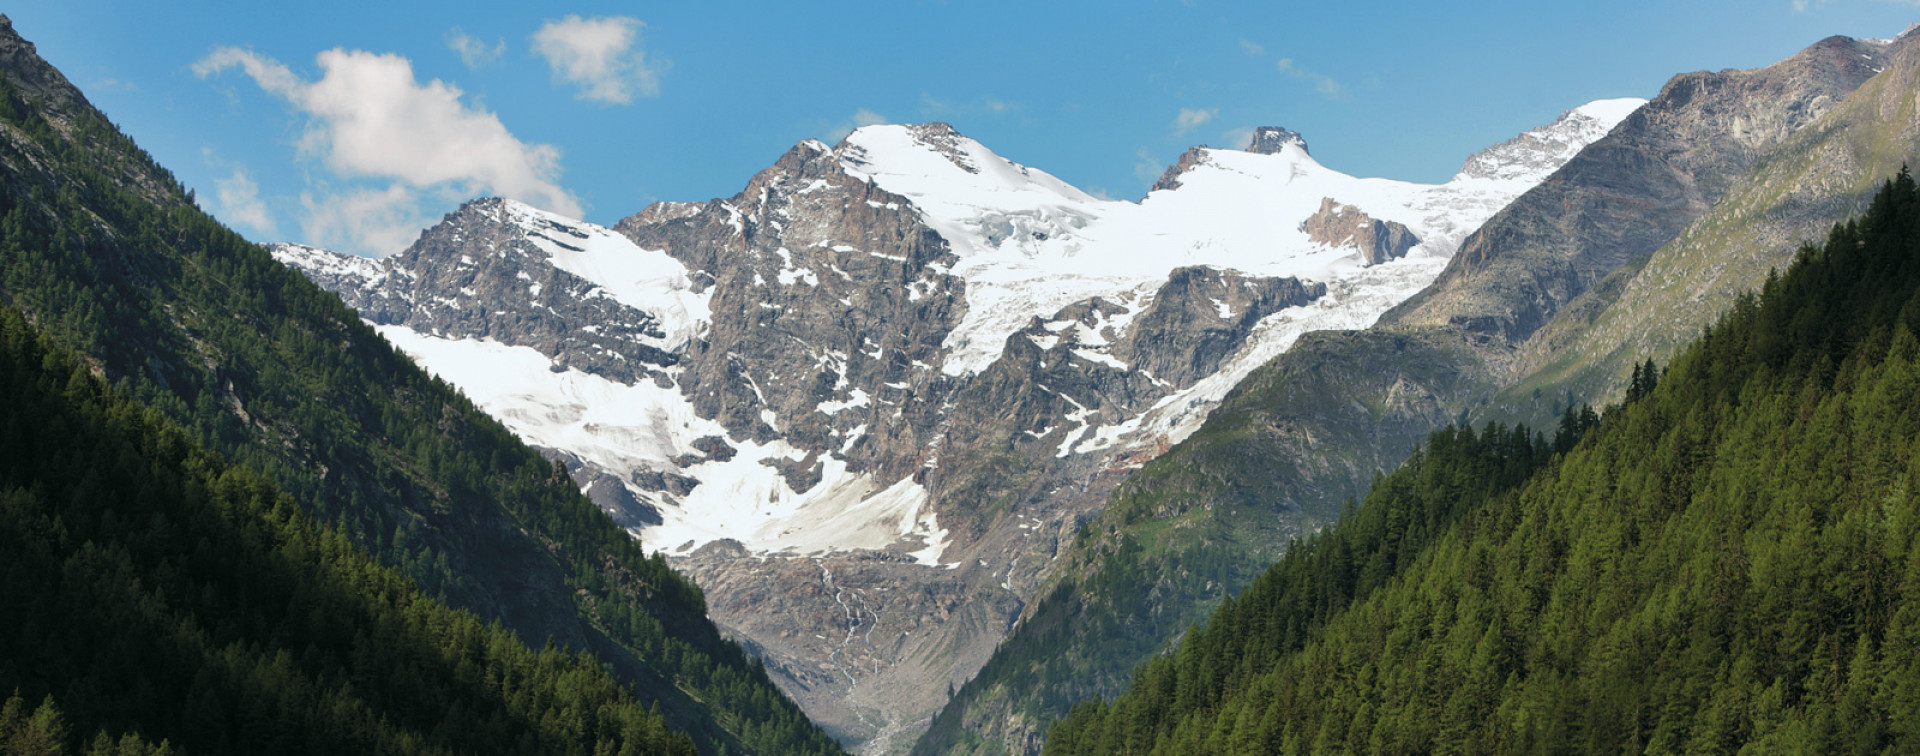 Cogne Valle d'Aosta